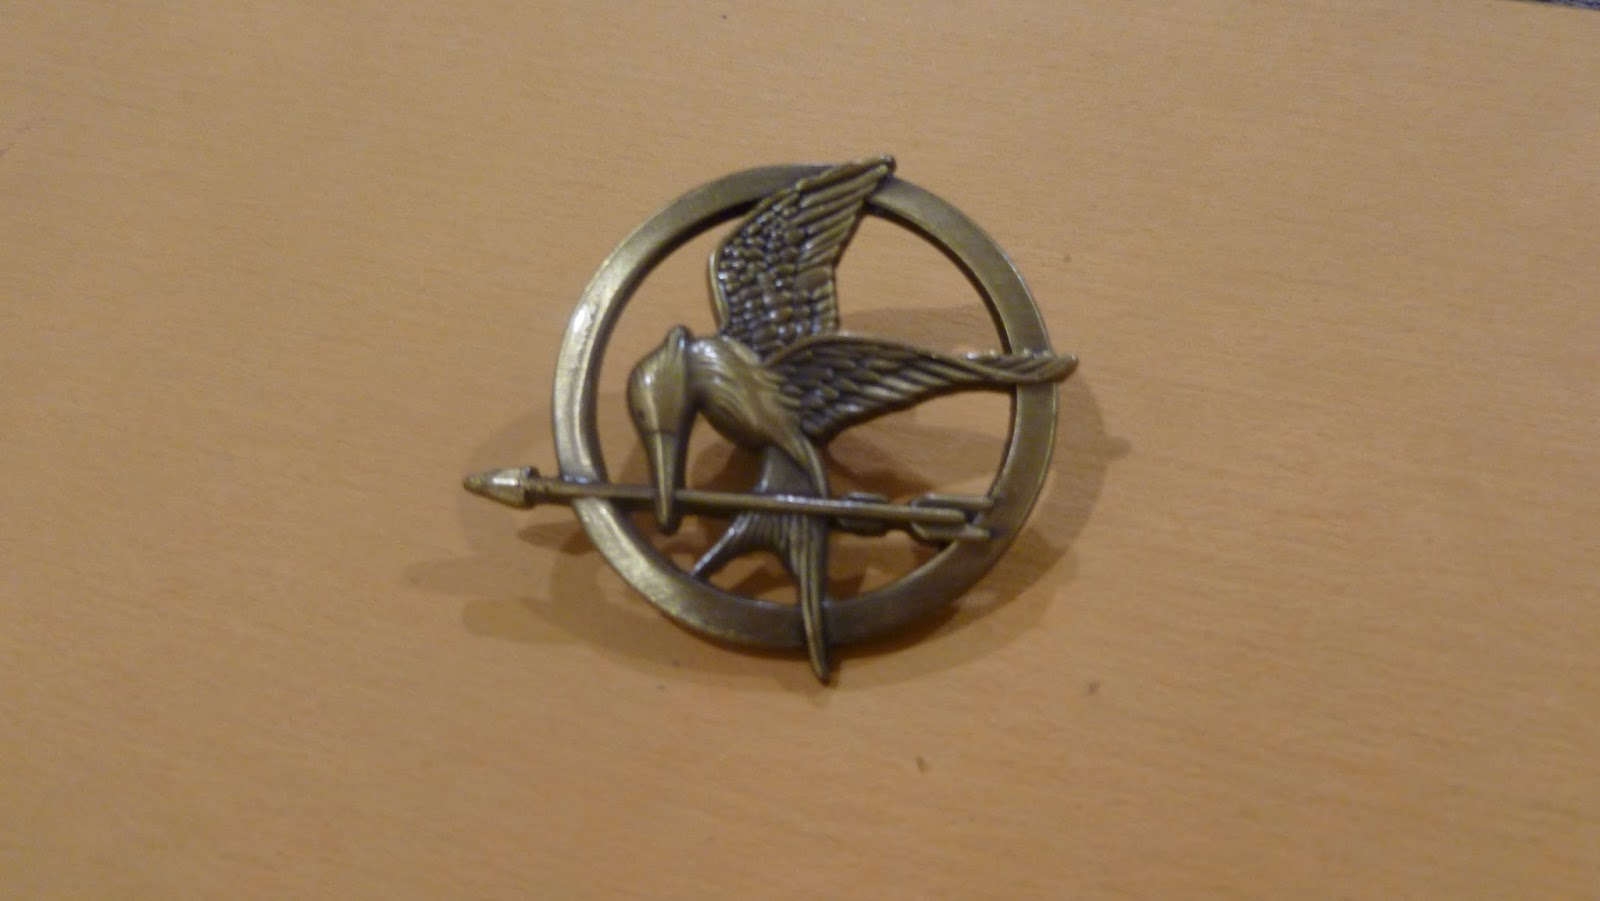 Download Hunger Games Merchandise: Replica Mockingjay Pin